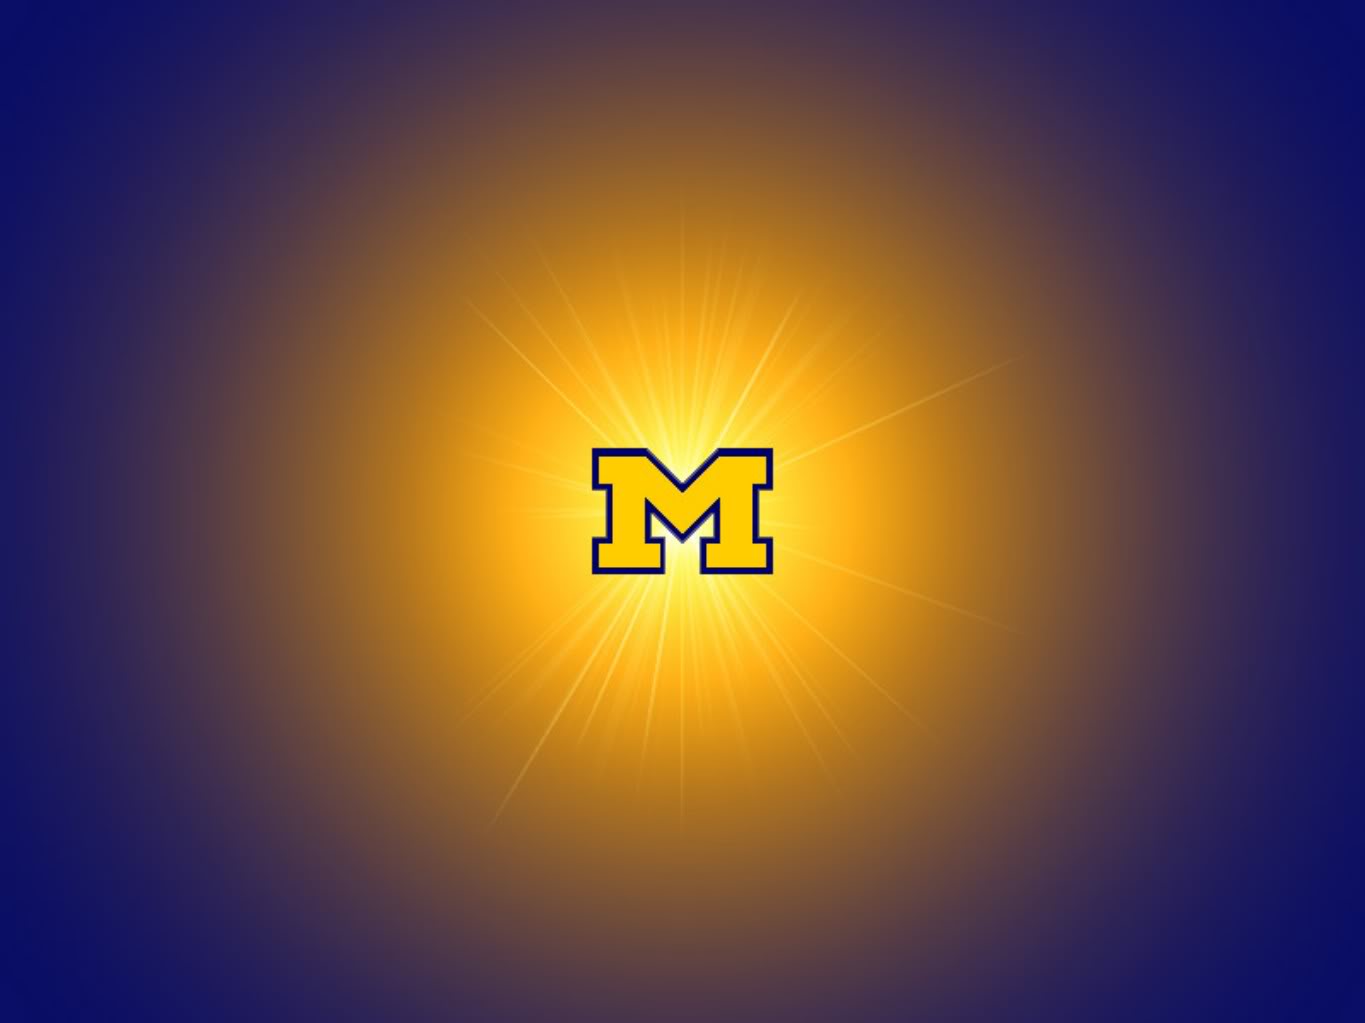  Background   Michigan Glowing M 1 Megabyte Wallpaper for Desktop